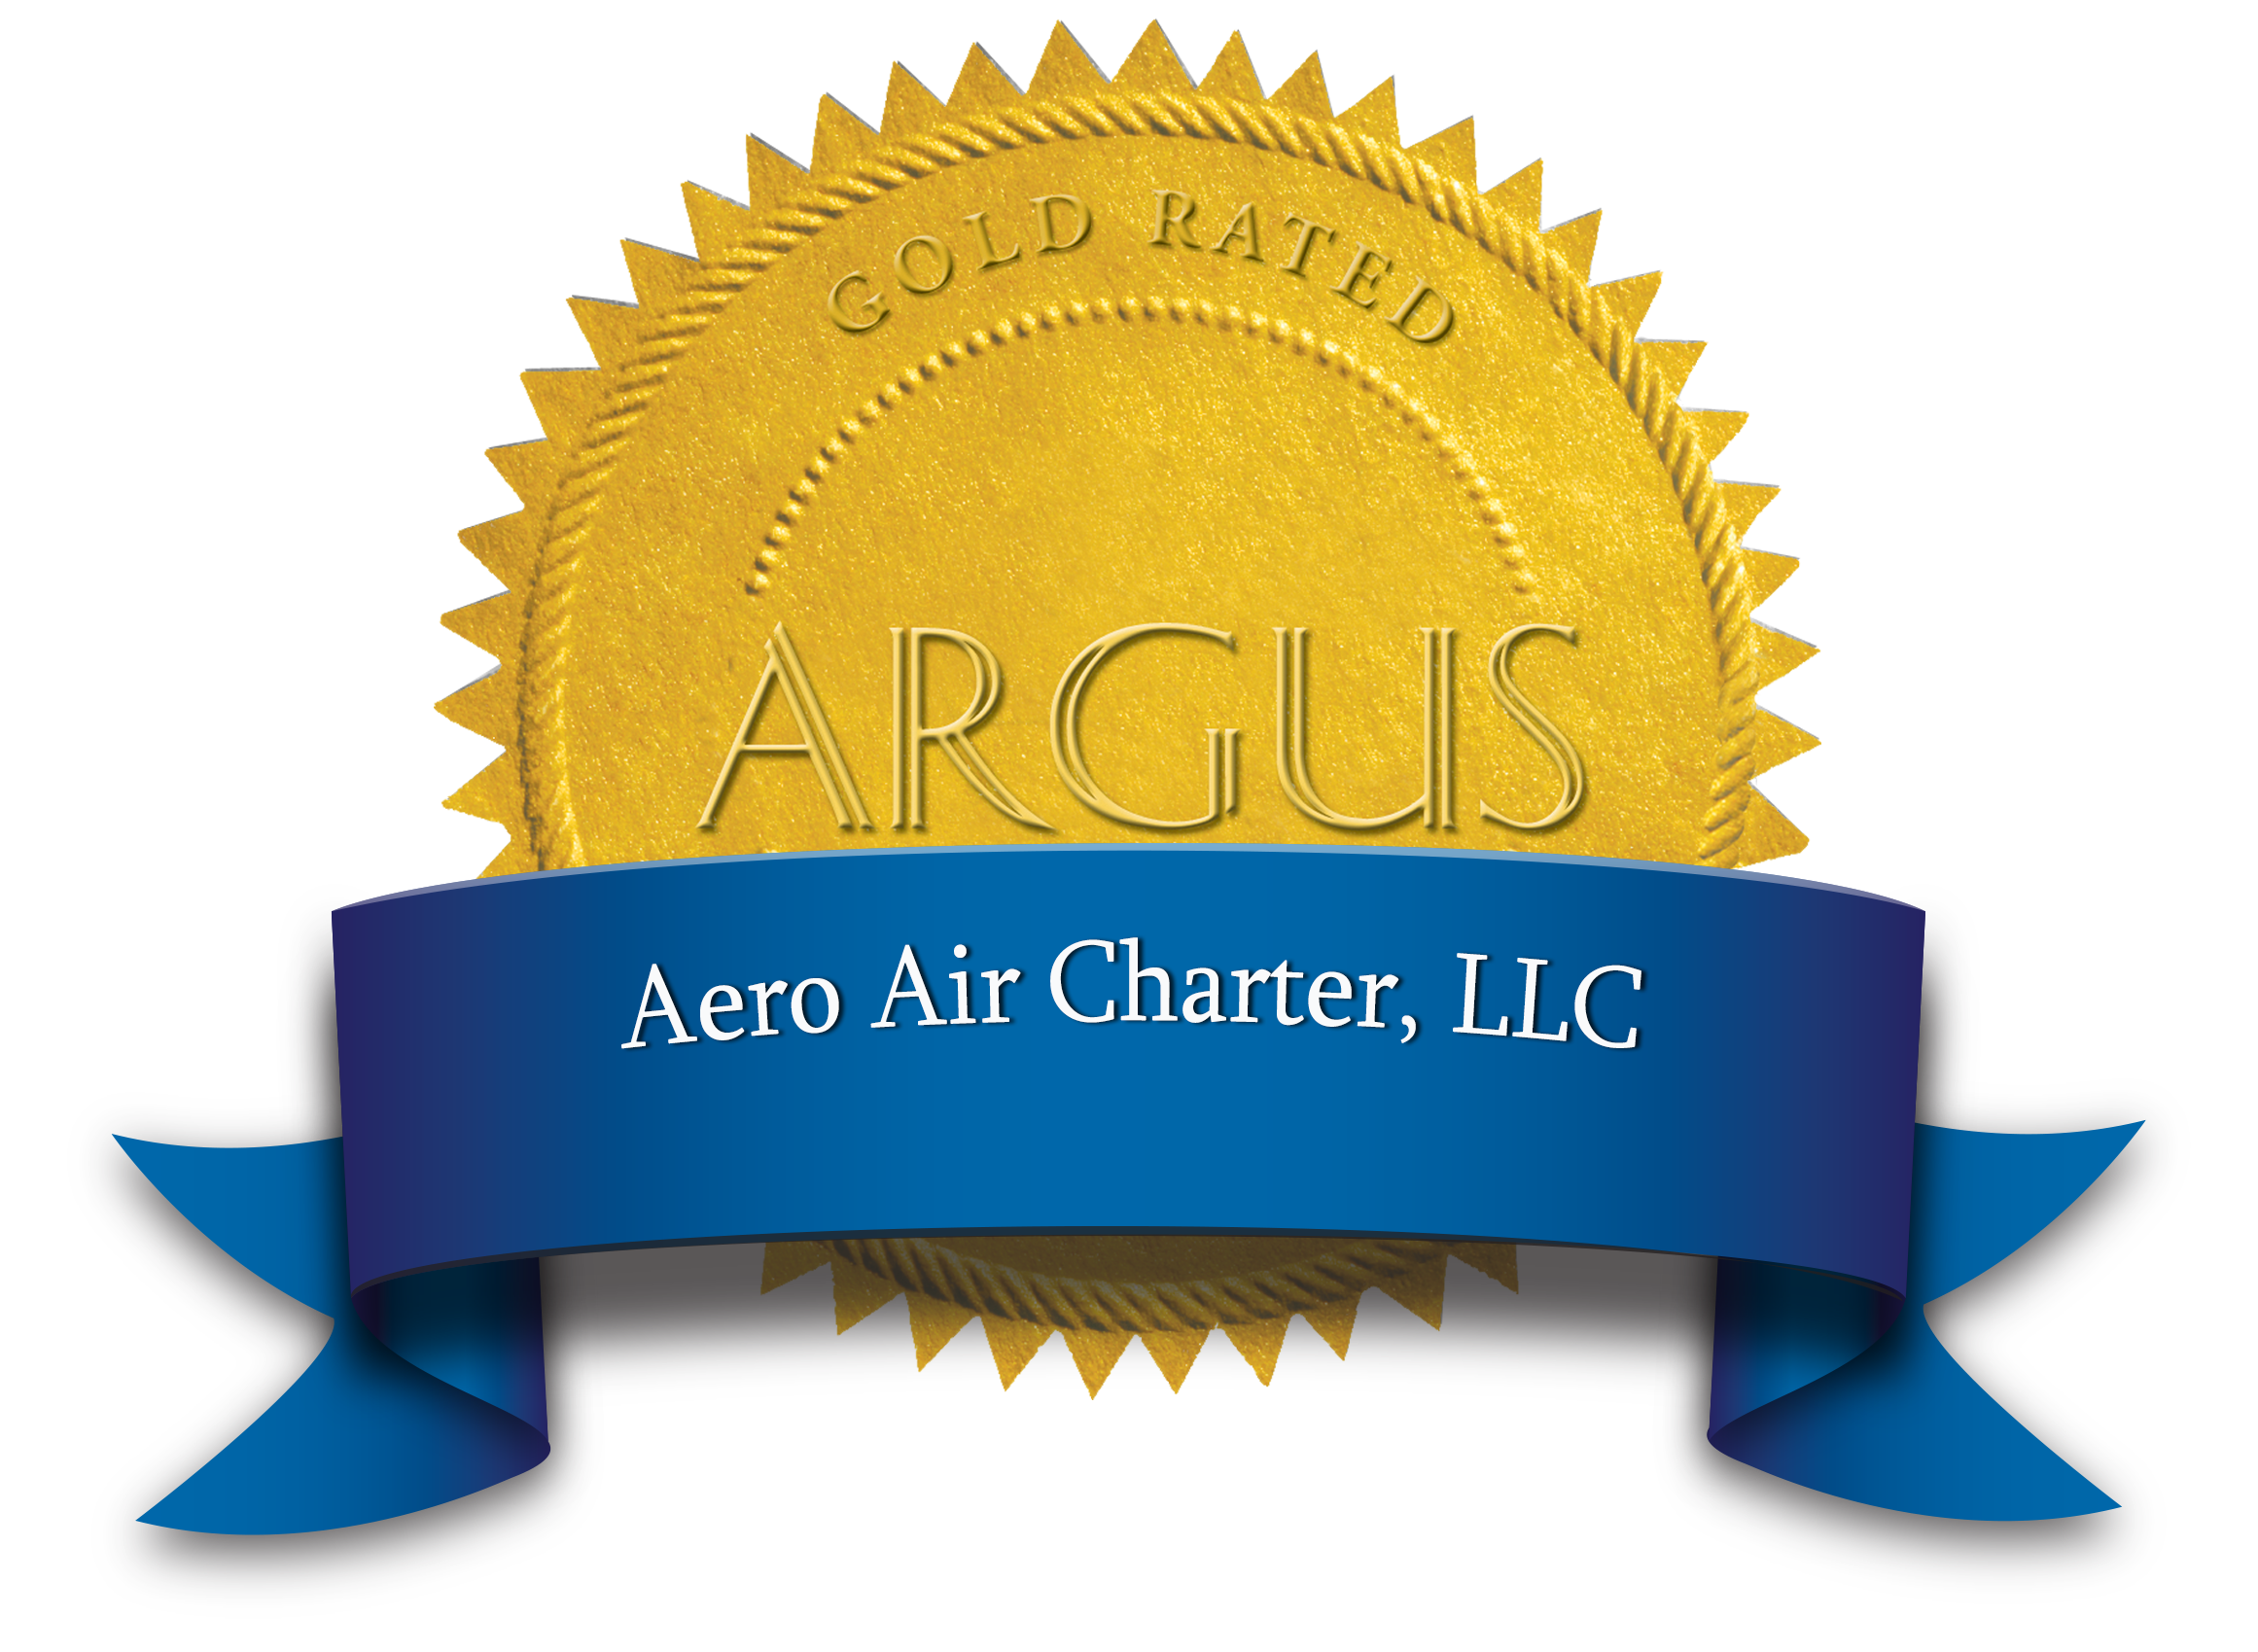 ARGUS-Rated Aero Air Charter (Copy)